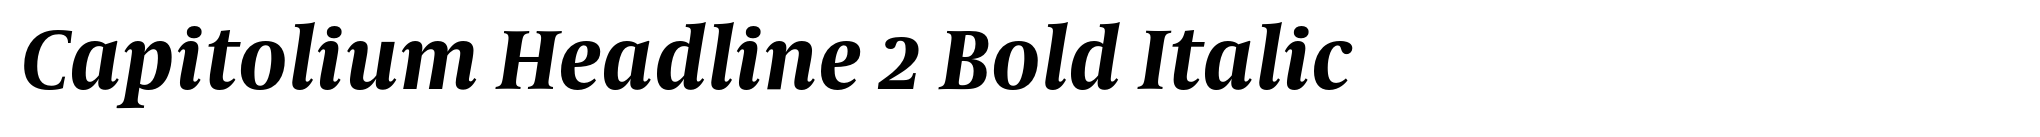 Capitolium Headline 2 Bold Italic image